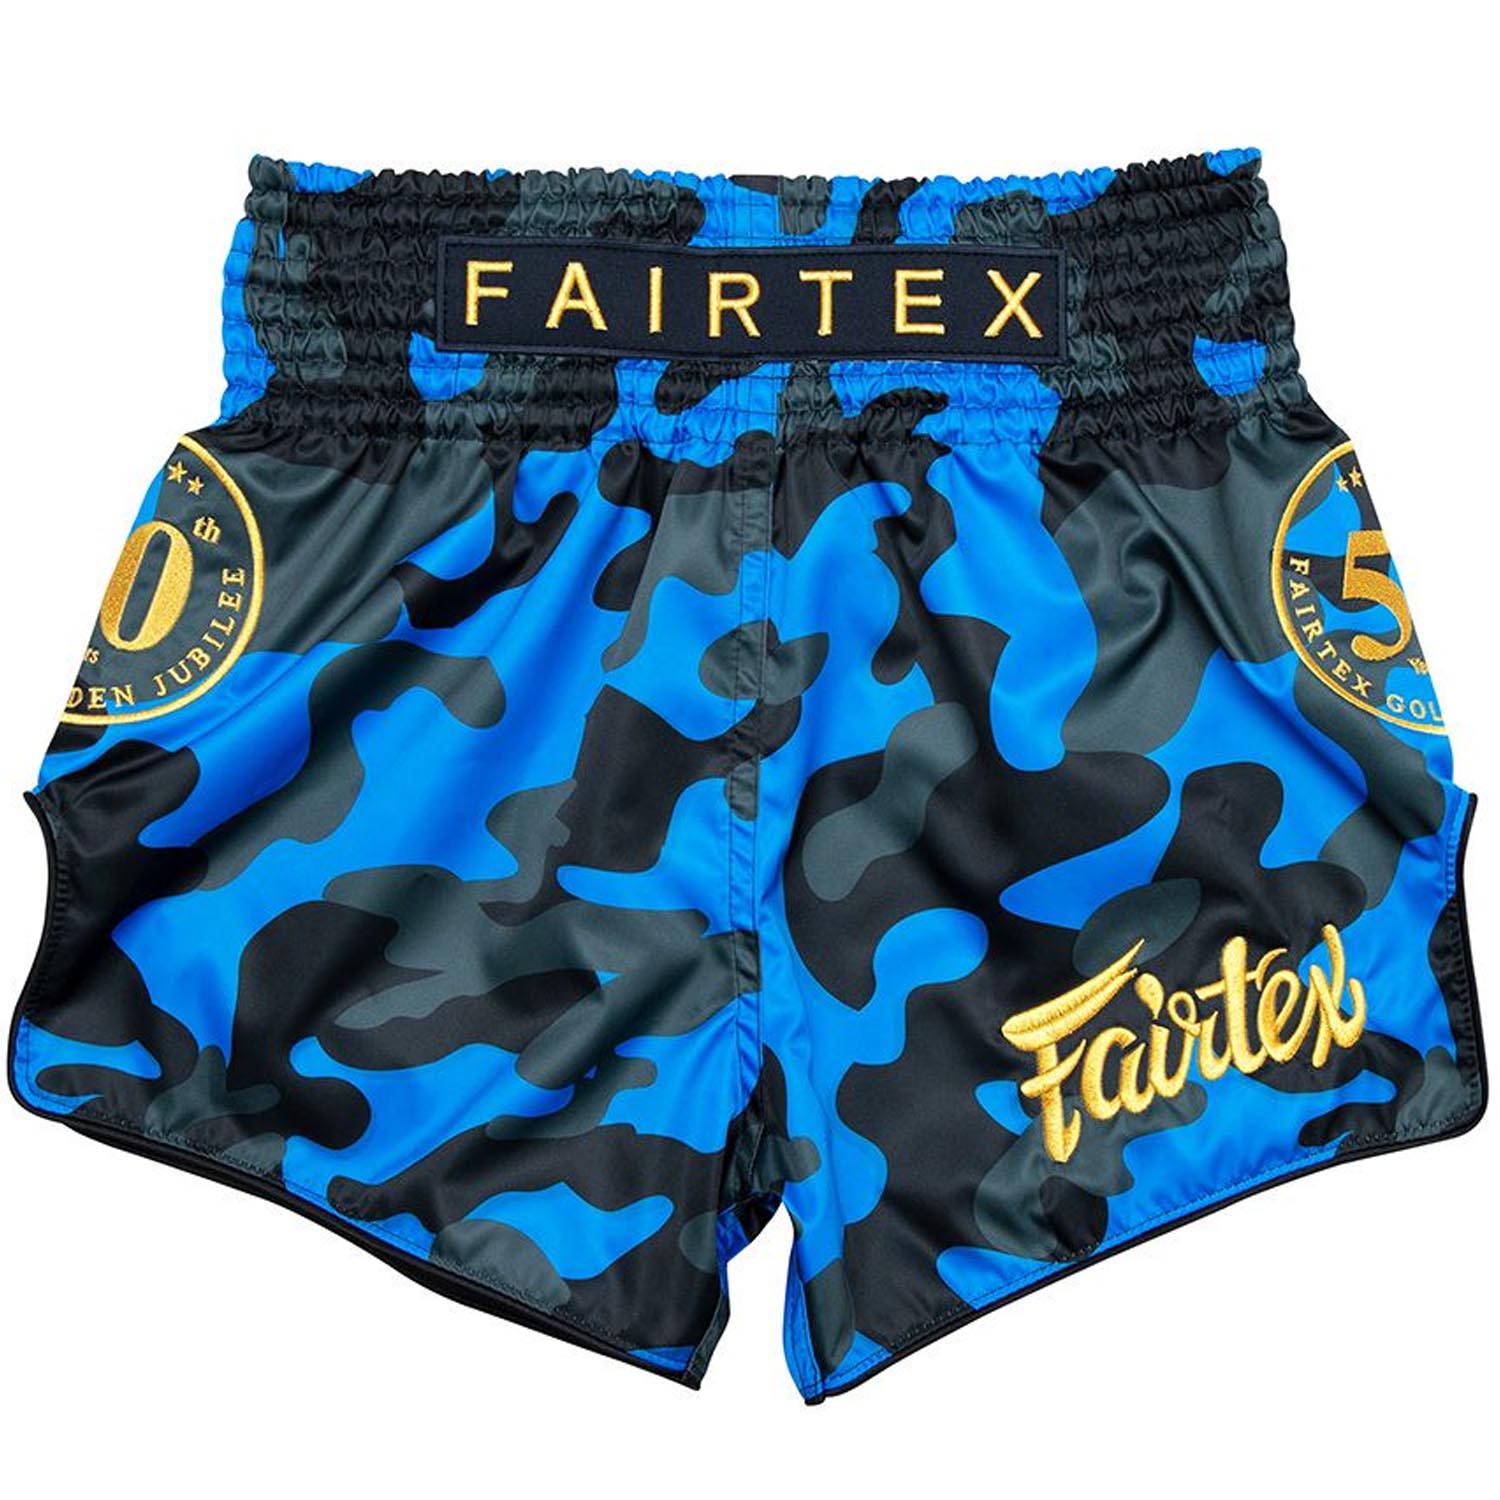 Fairtex Muay Shorts, Golden Jubilee Solid, BS1917, S